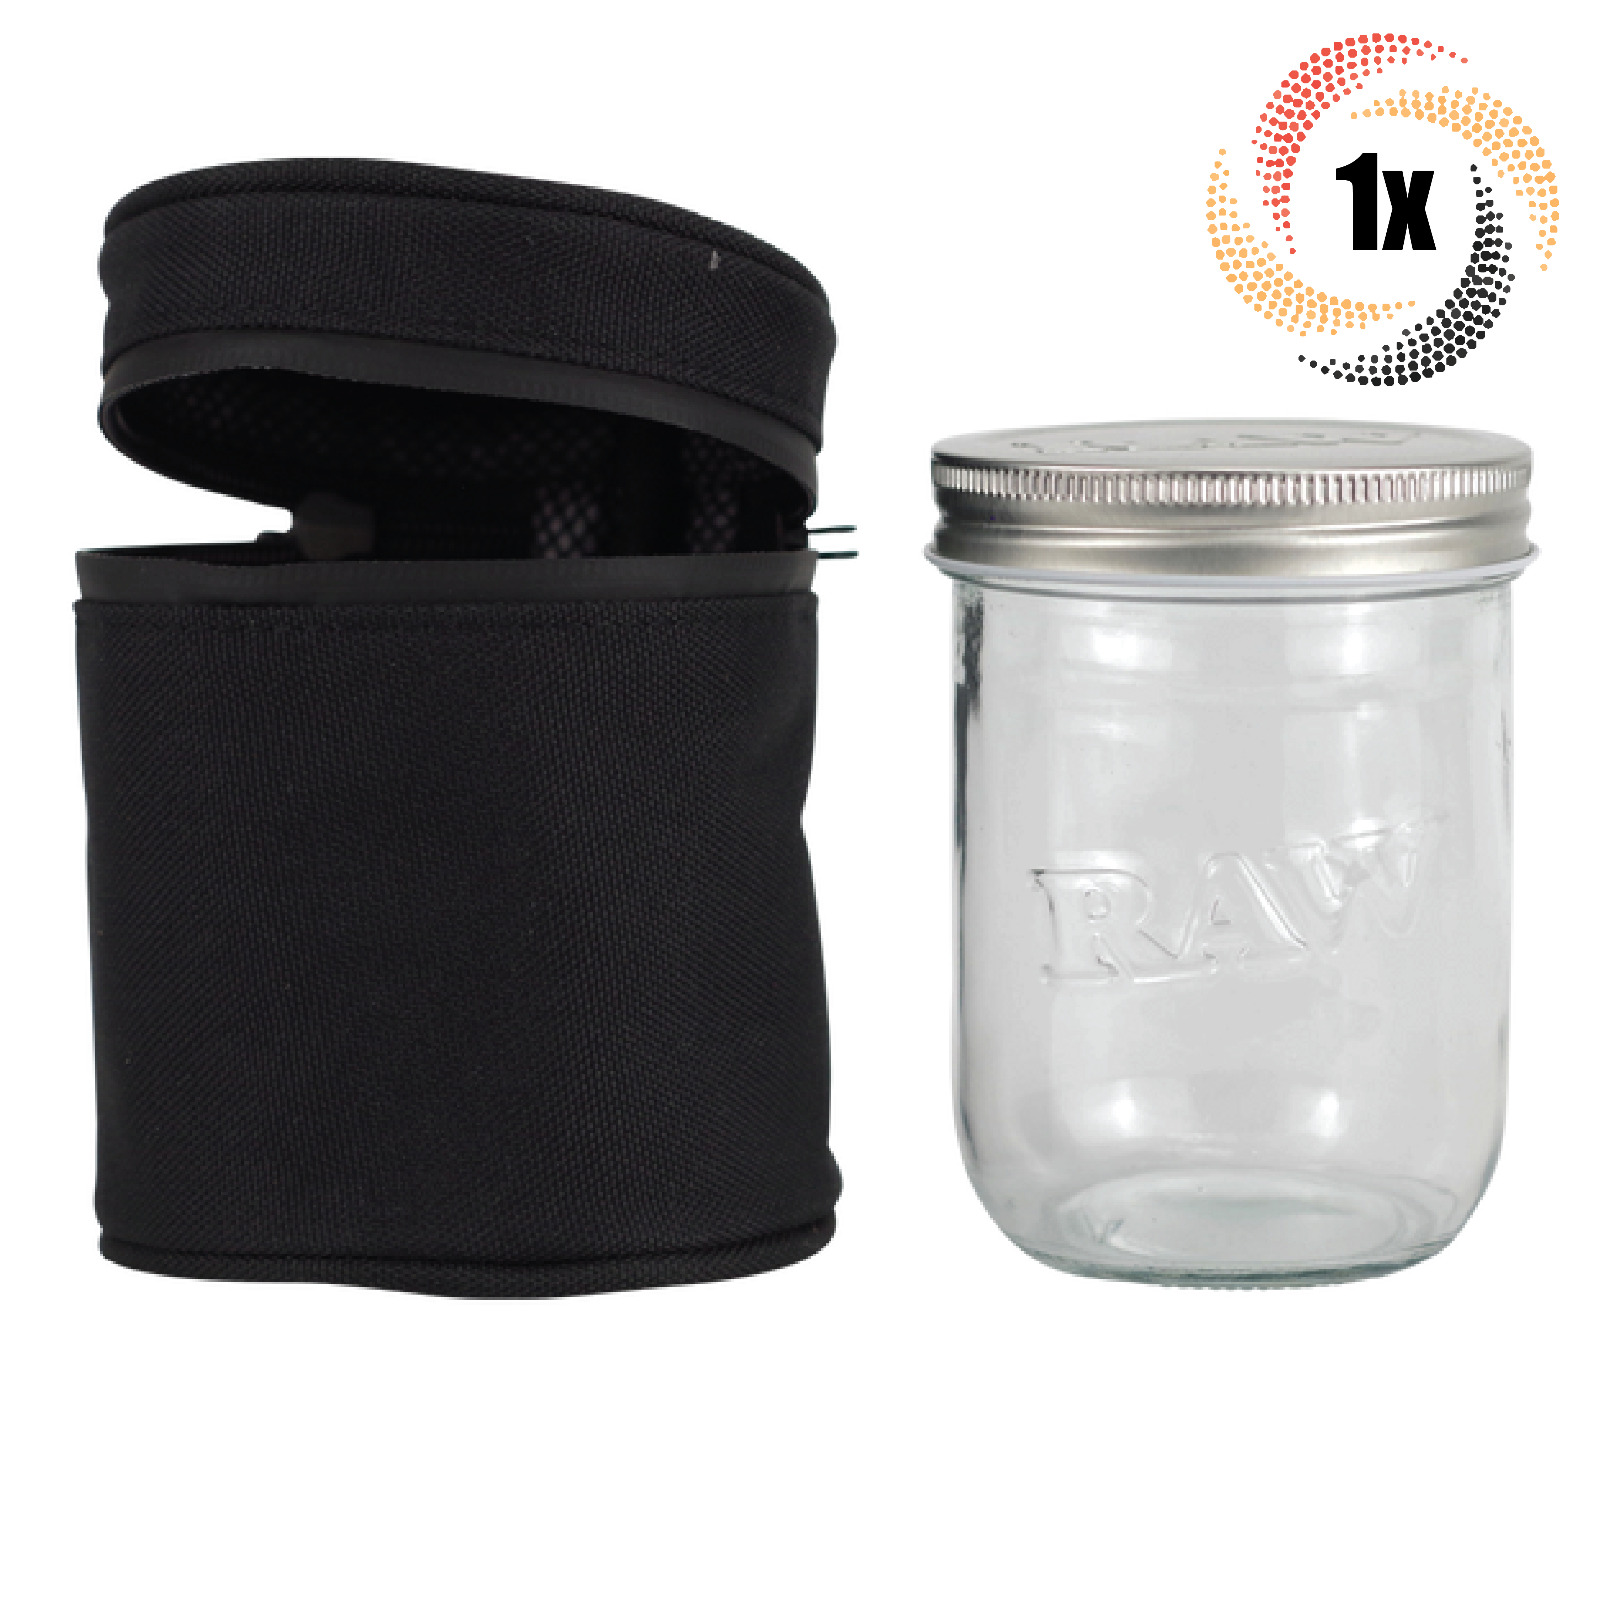 1x Set Raw Mason Jar With Smell Proof Black Case | 16oz | Fast Shipping